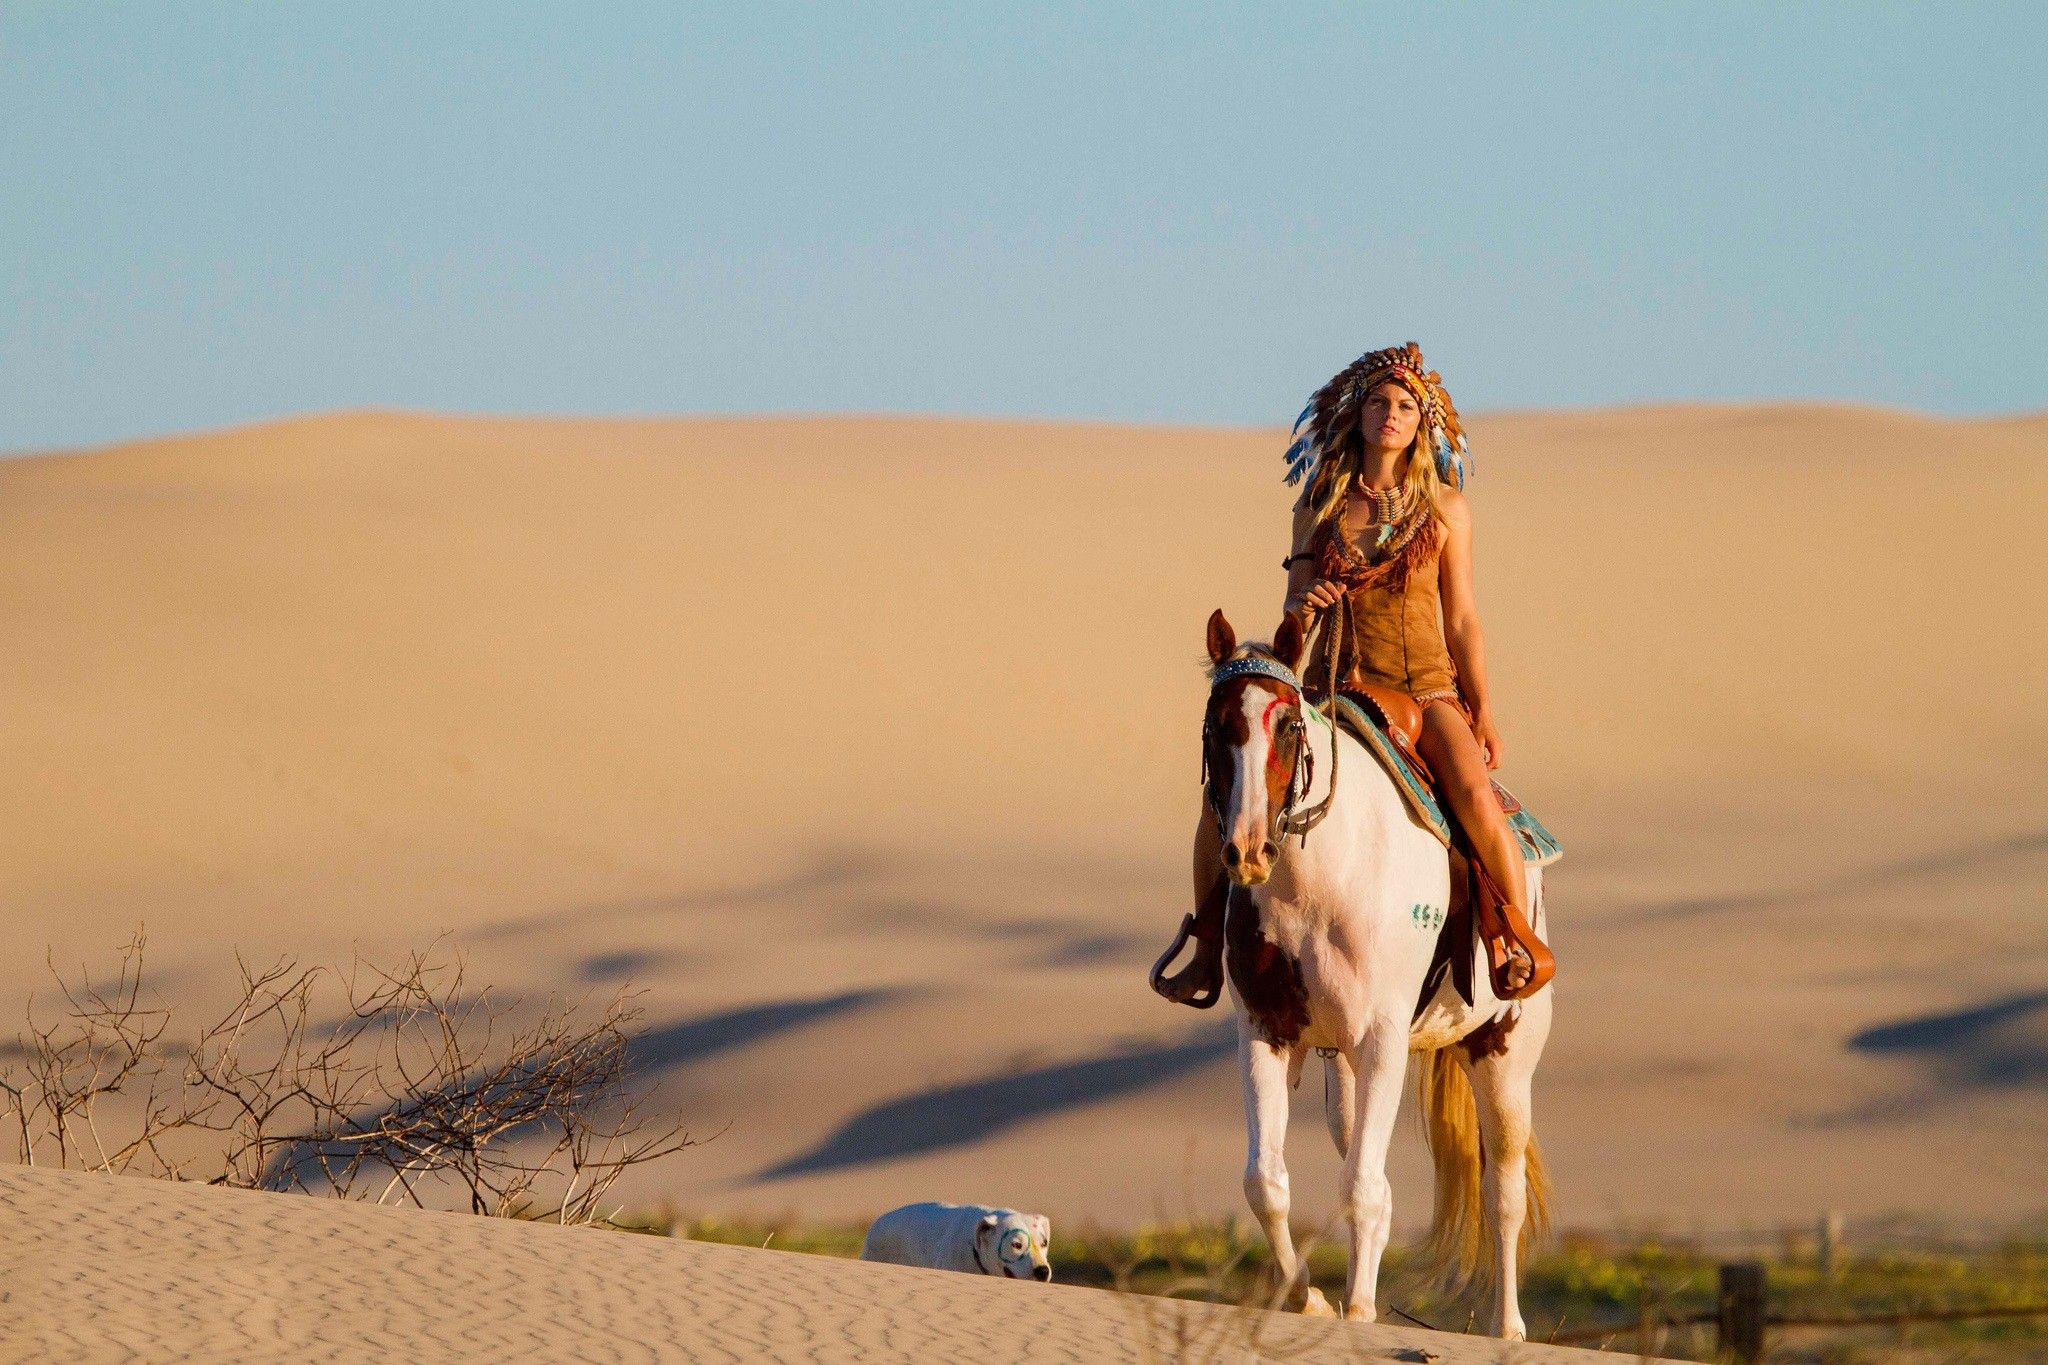 #model, #women, #horse, #desert, #women outdoors